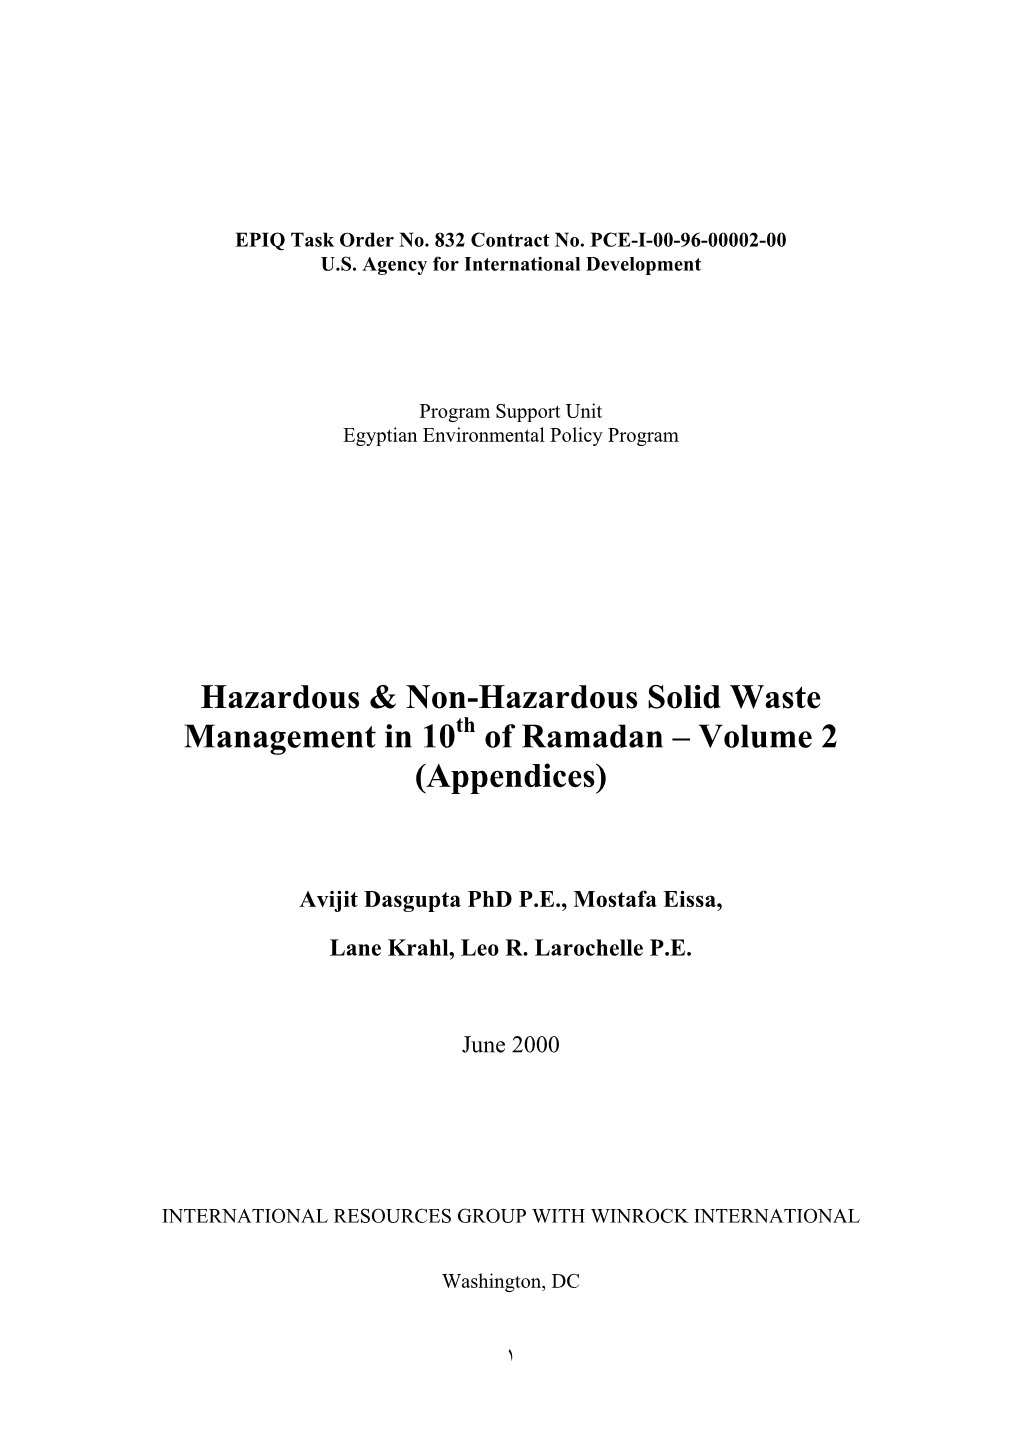 Hazardous & Non-Hazardous Solid Waste Management in 10 Of